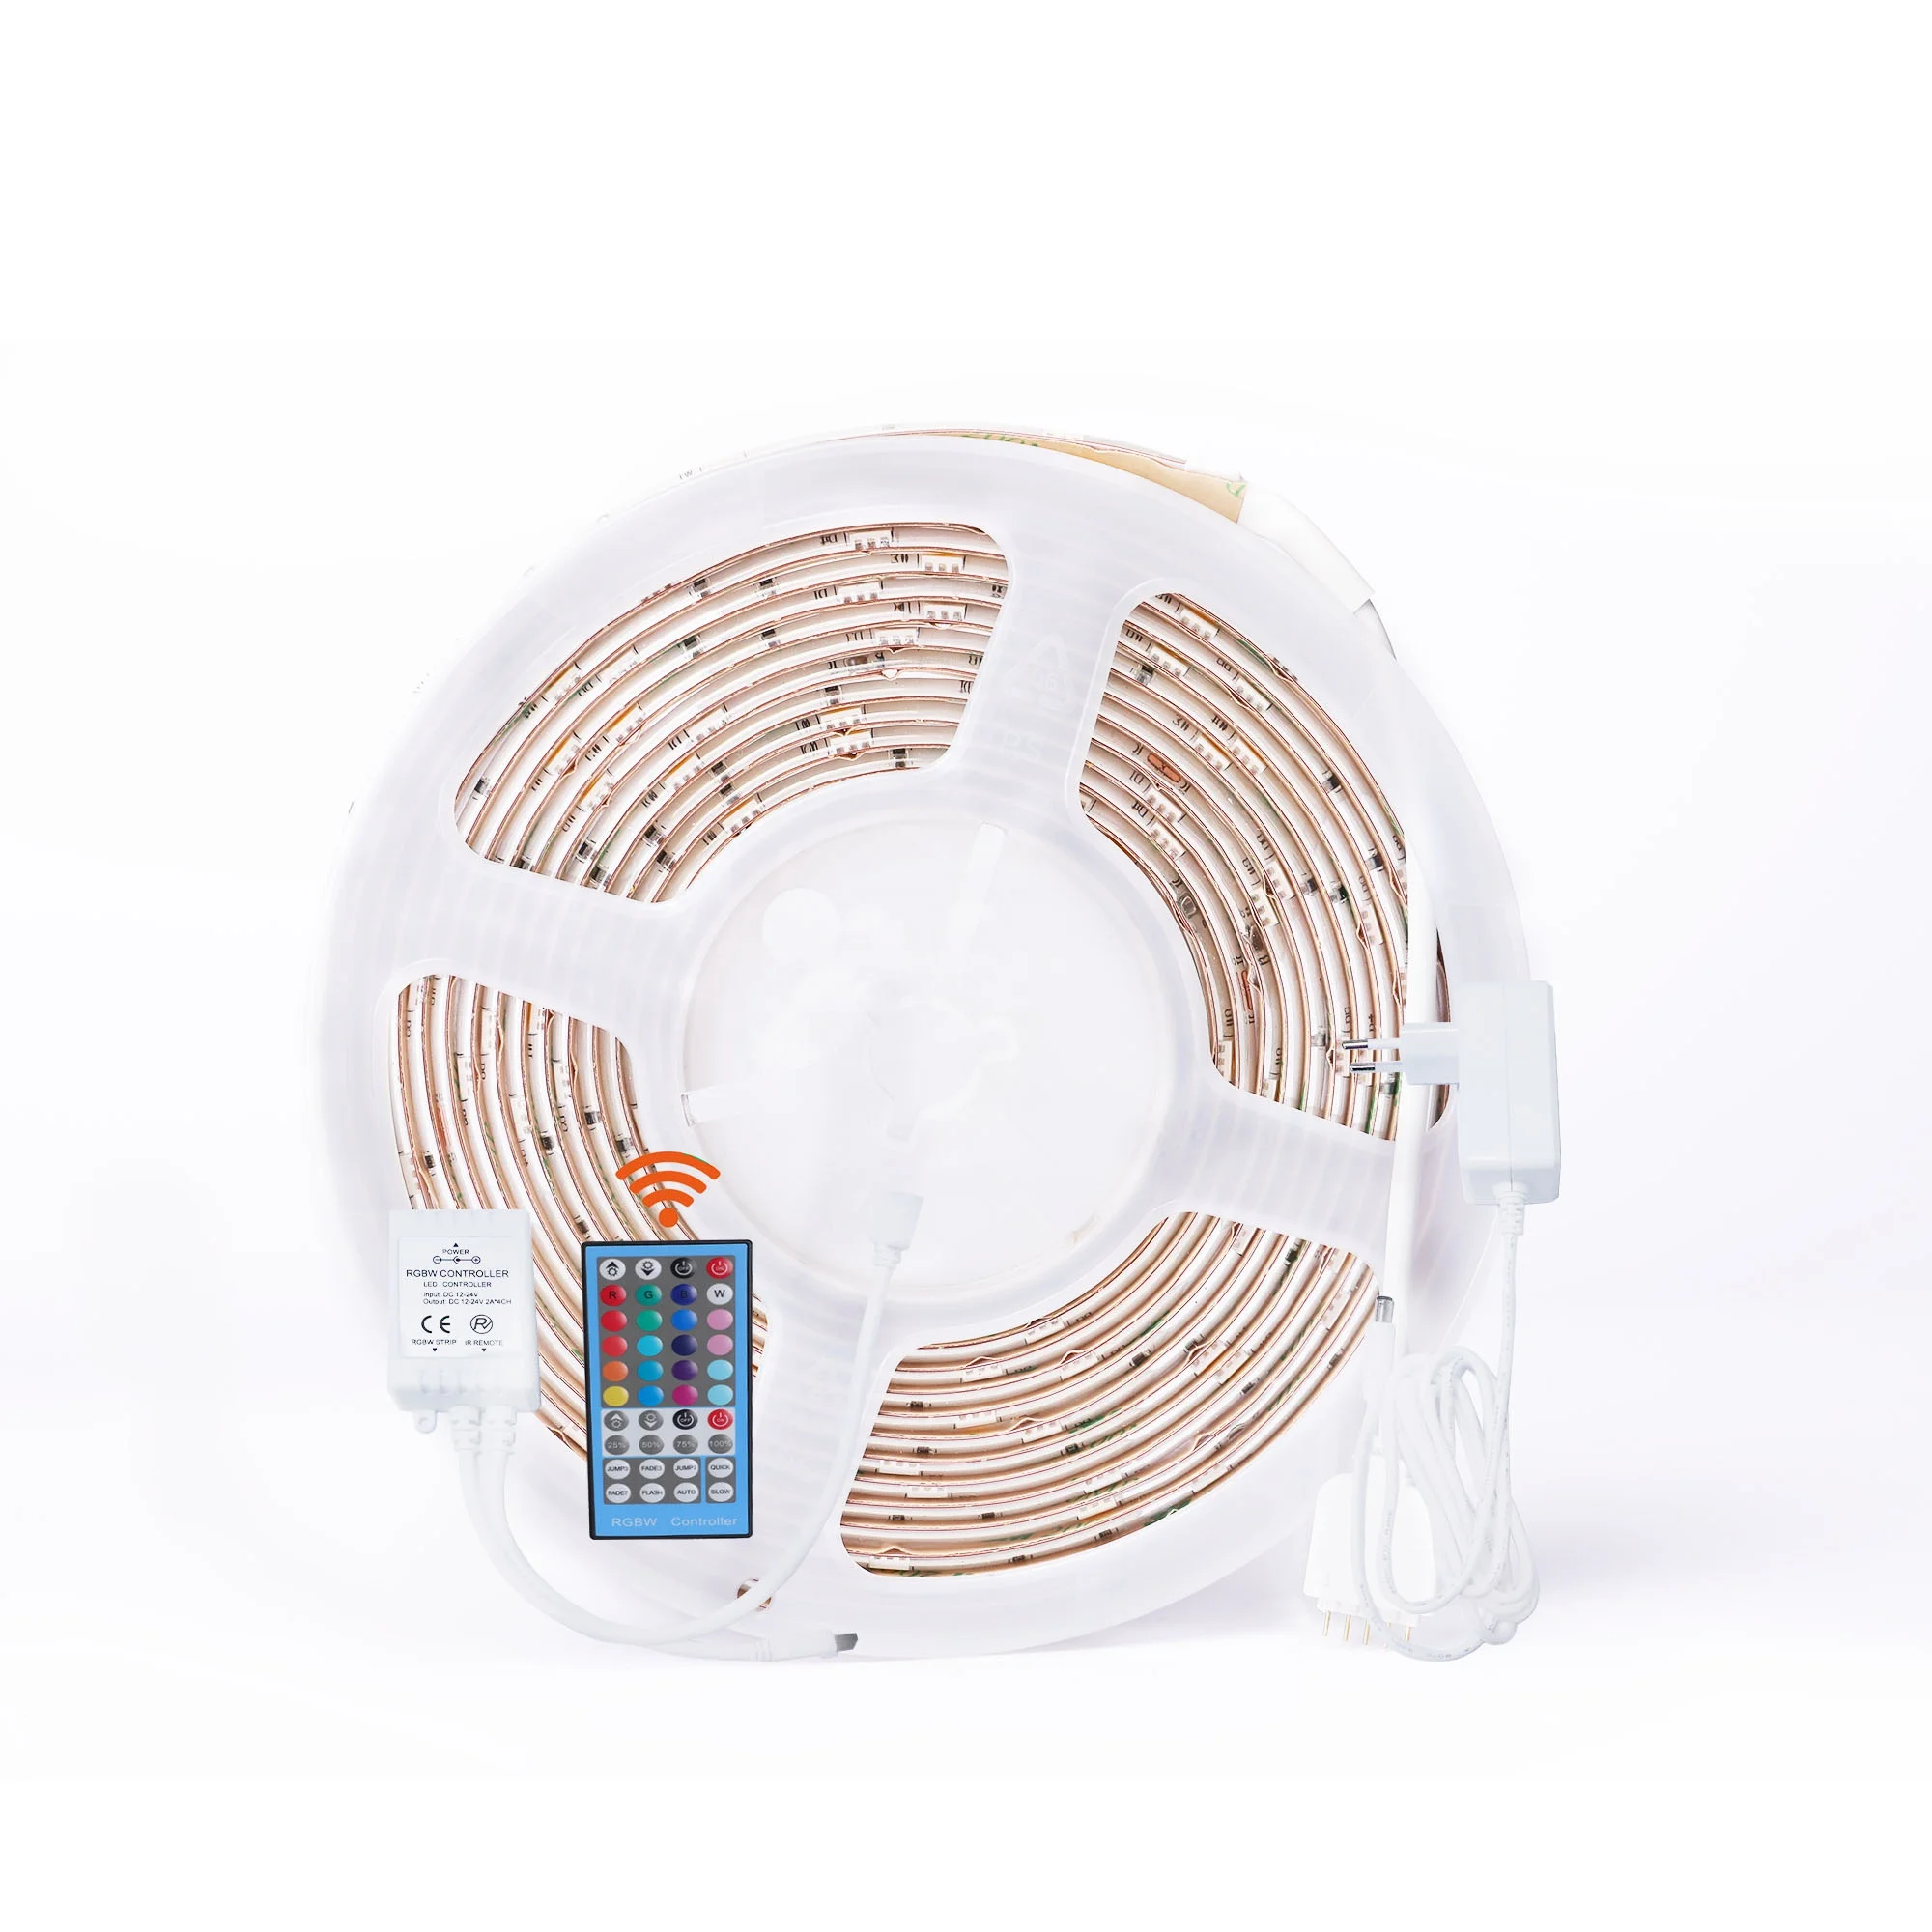 Dimming led tape light with 16 preset colors decoration 5050 RGB flexible led light strip